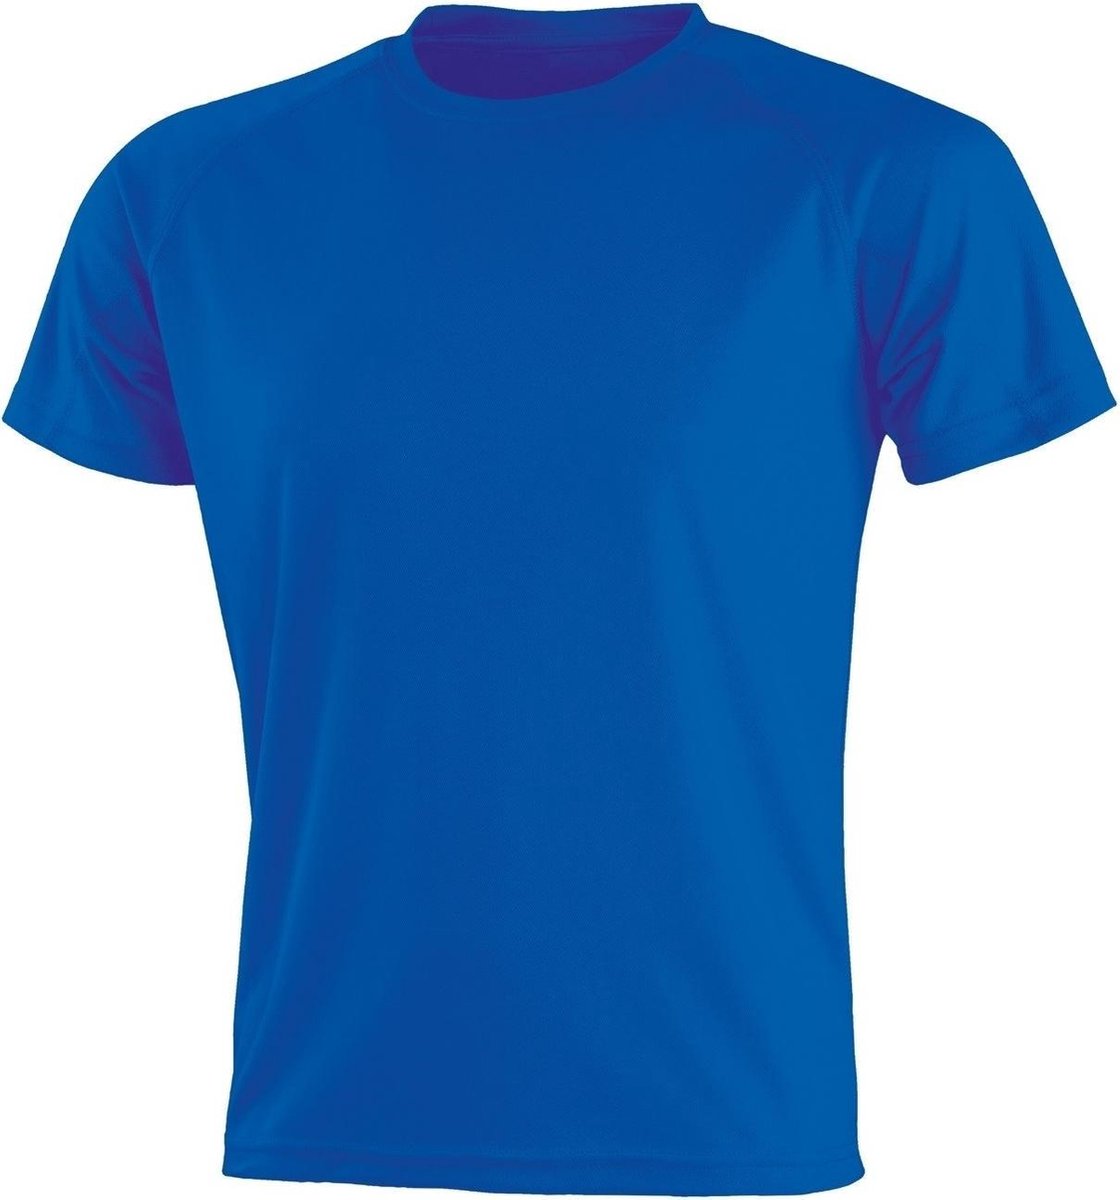 Senvi Sports Performance T-Shirt- Royal - S - Unisex